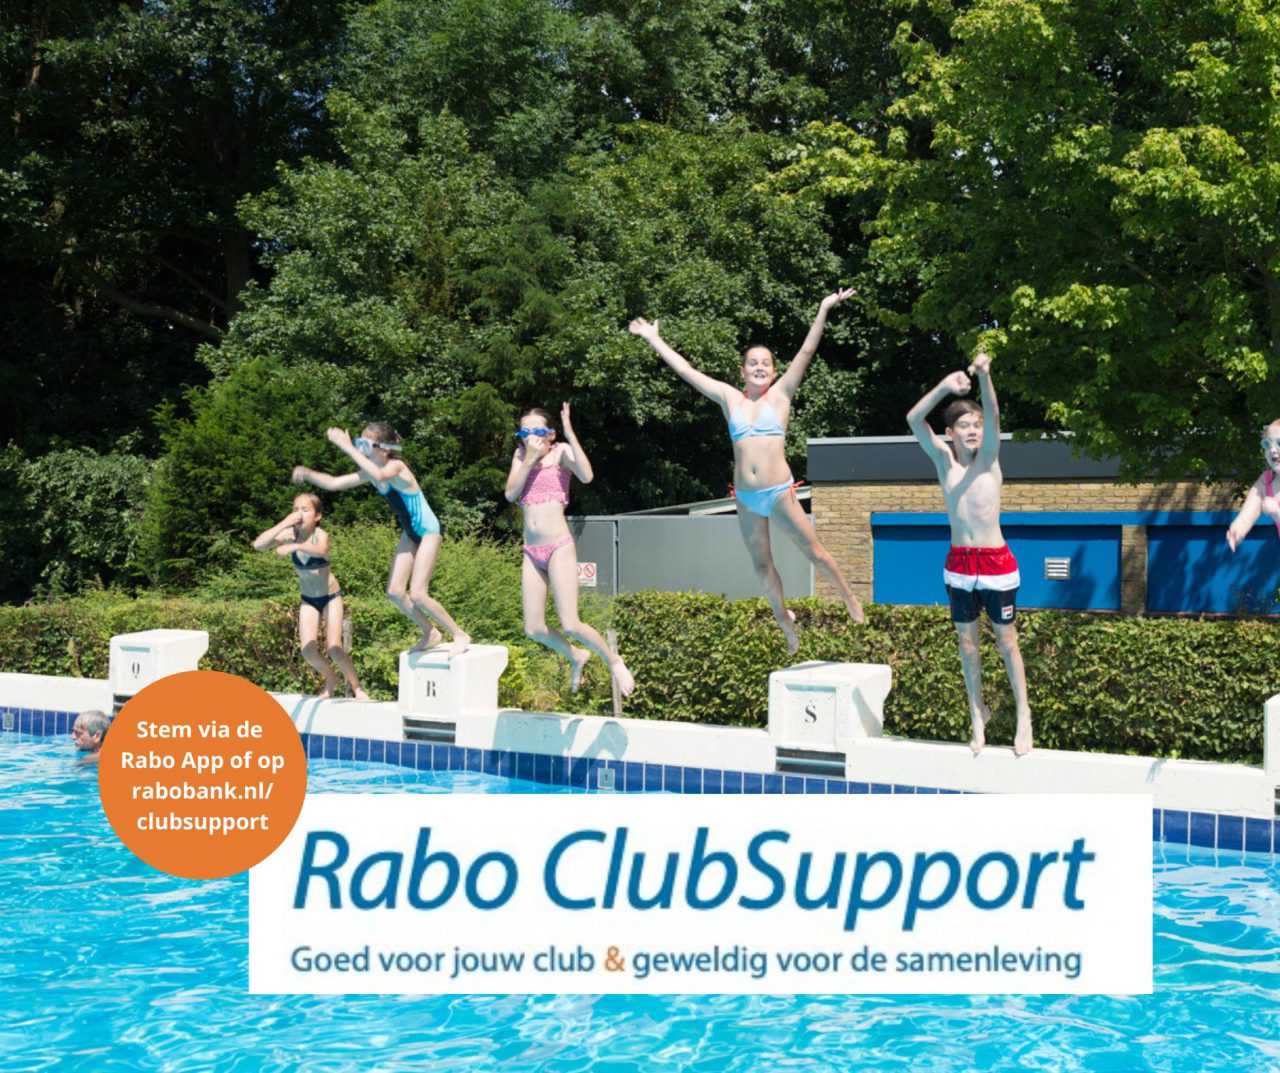 Rabo-clubsupport-Facebook-1-1280x1073.jpg